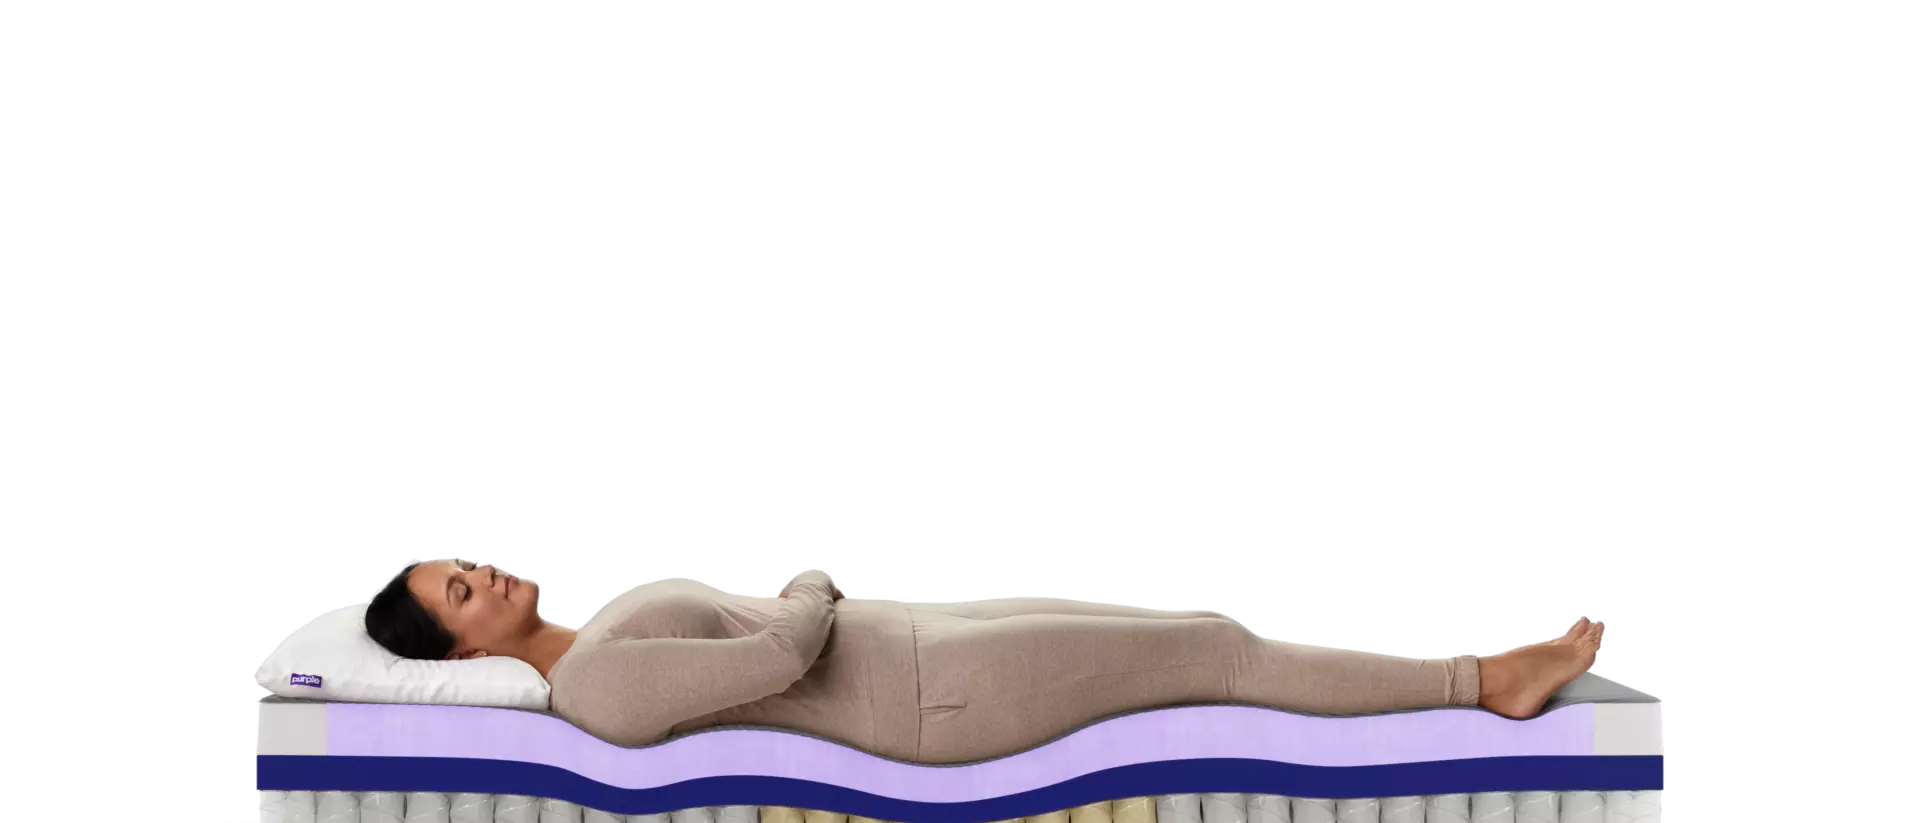 A woman sleeping on Purple RestorePlus hybrid mattress